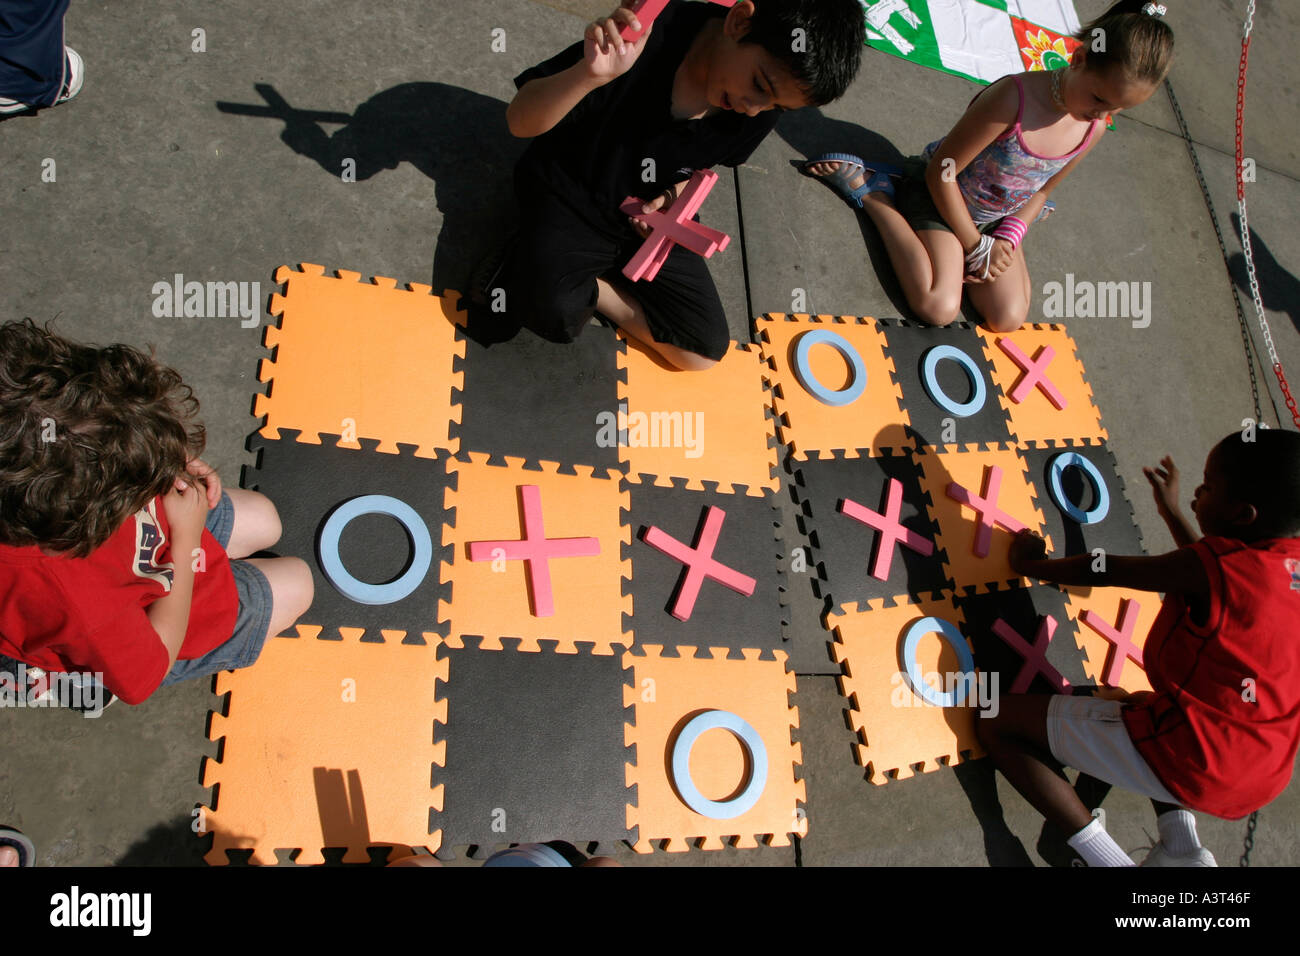 Kinder spielen am 0 X im street London England UK Stockfoto